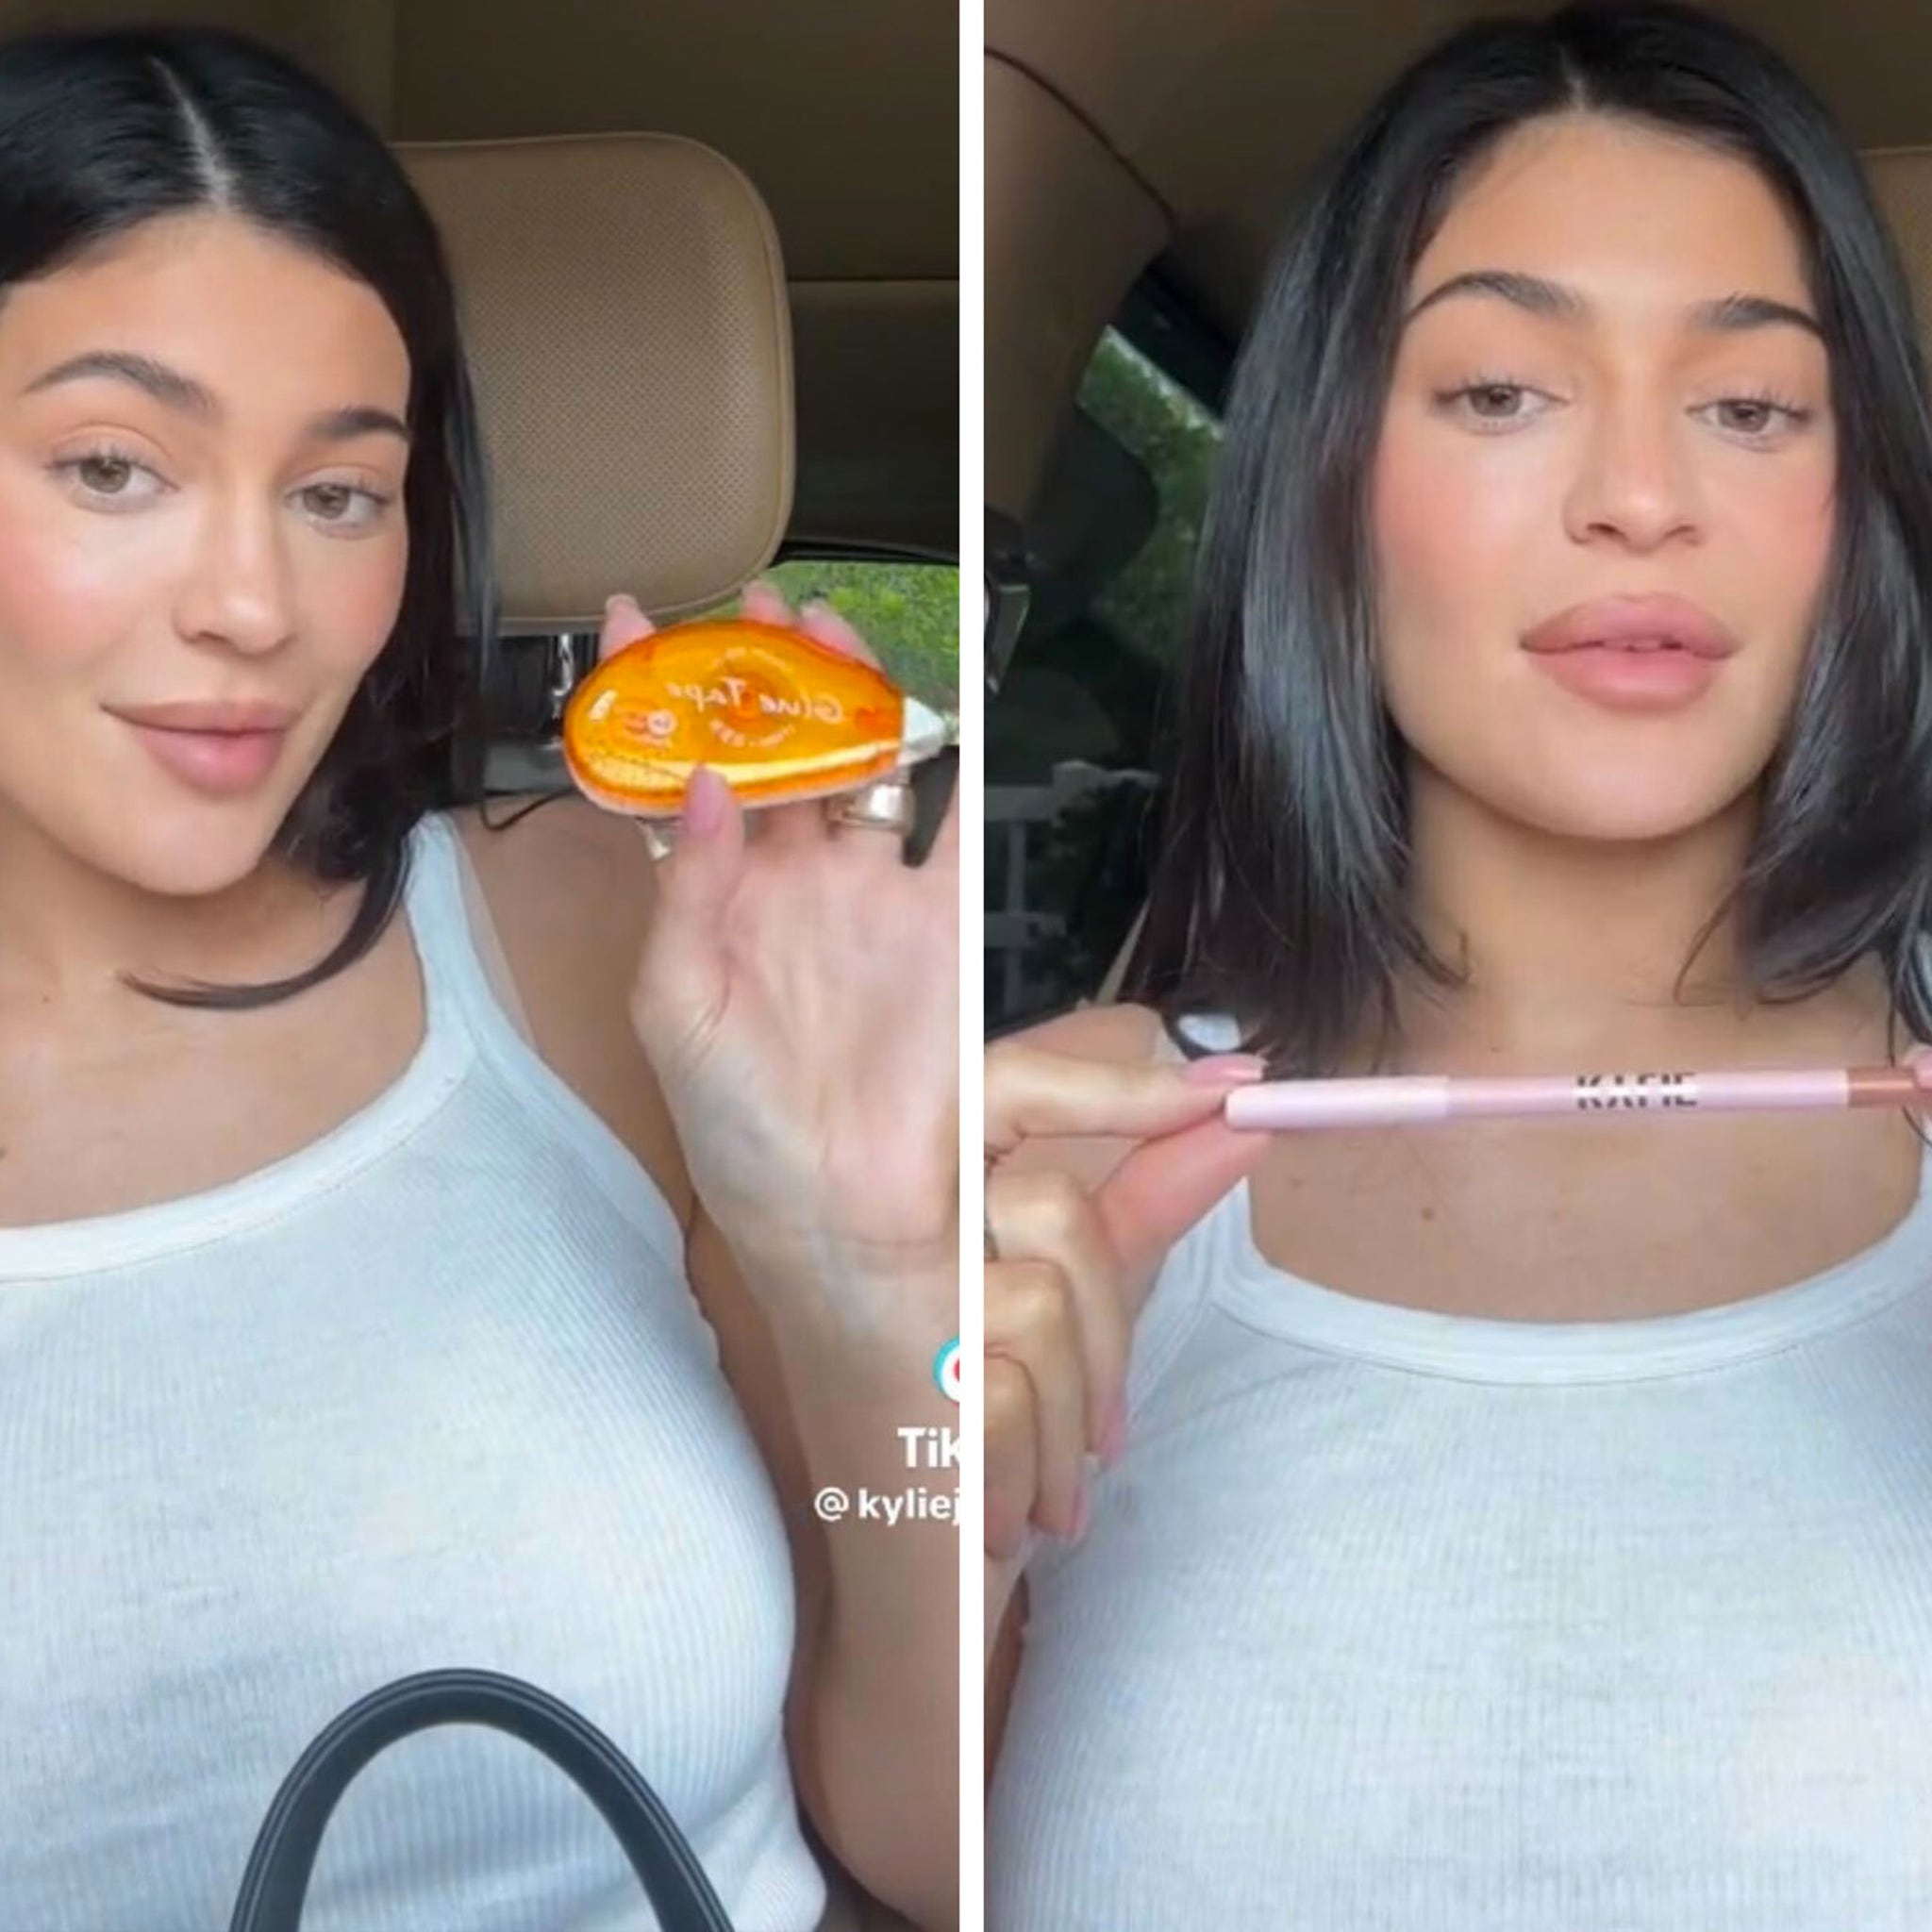 Makeup Sponge  Kylie Cosmetics by Kylie Jenner